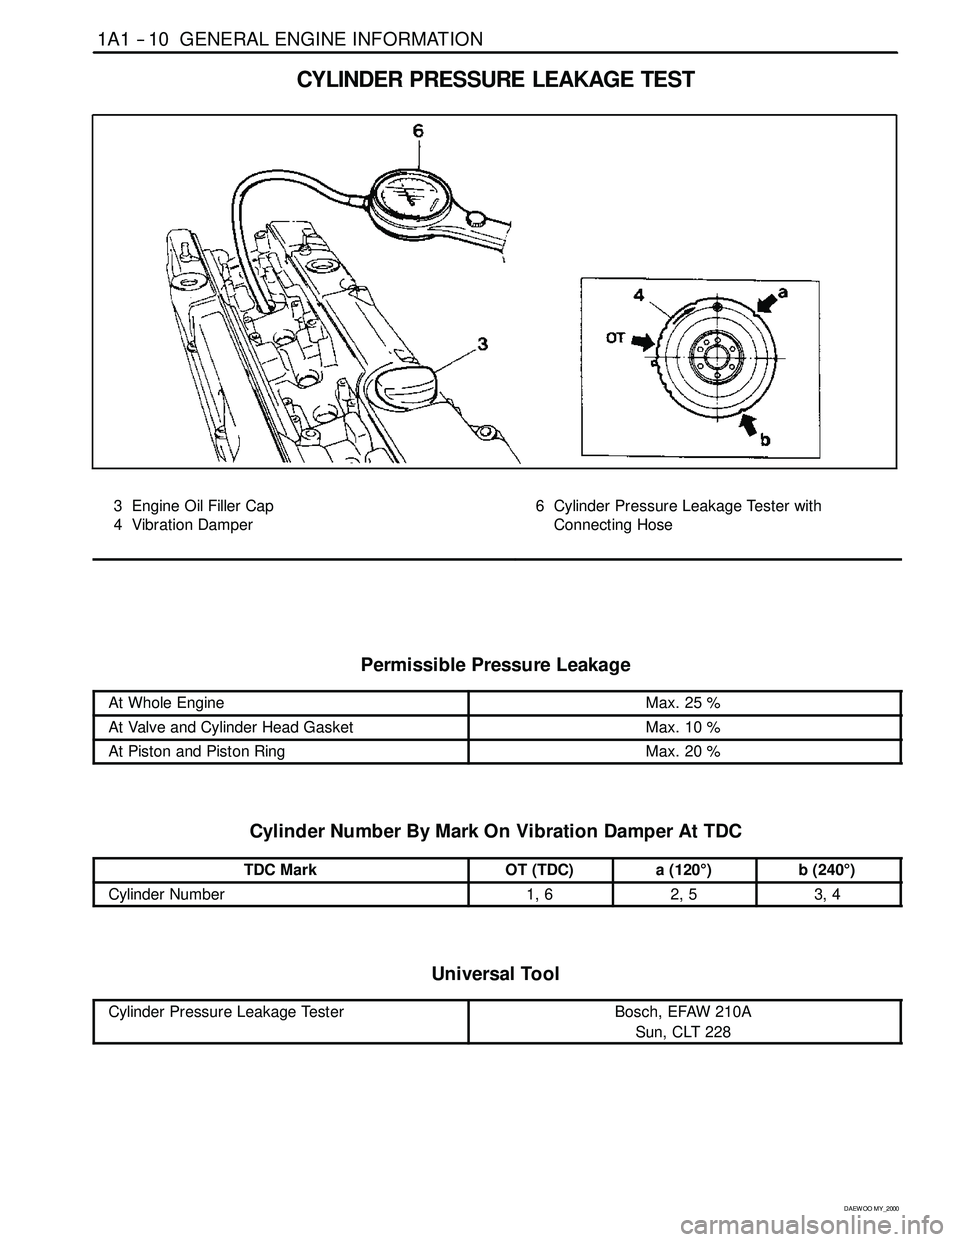 SSANGYONG KORANDO 1997  Service Repair Manual 1A1 -- 10 GENERAL ENGINE INFORMATION
D AEW OO M Y_2000
CYLINDER PRESSURE LEAKAGE TEST
3 Engine Oil Filler Cap
4 Vibration Damper6 Cylinder Pressure Leakage Tester with
Connecting Hose
Permissible Pres